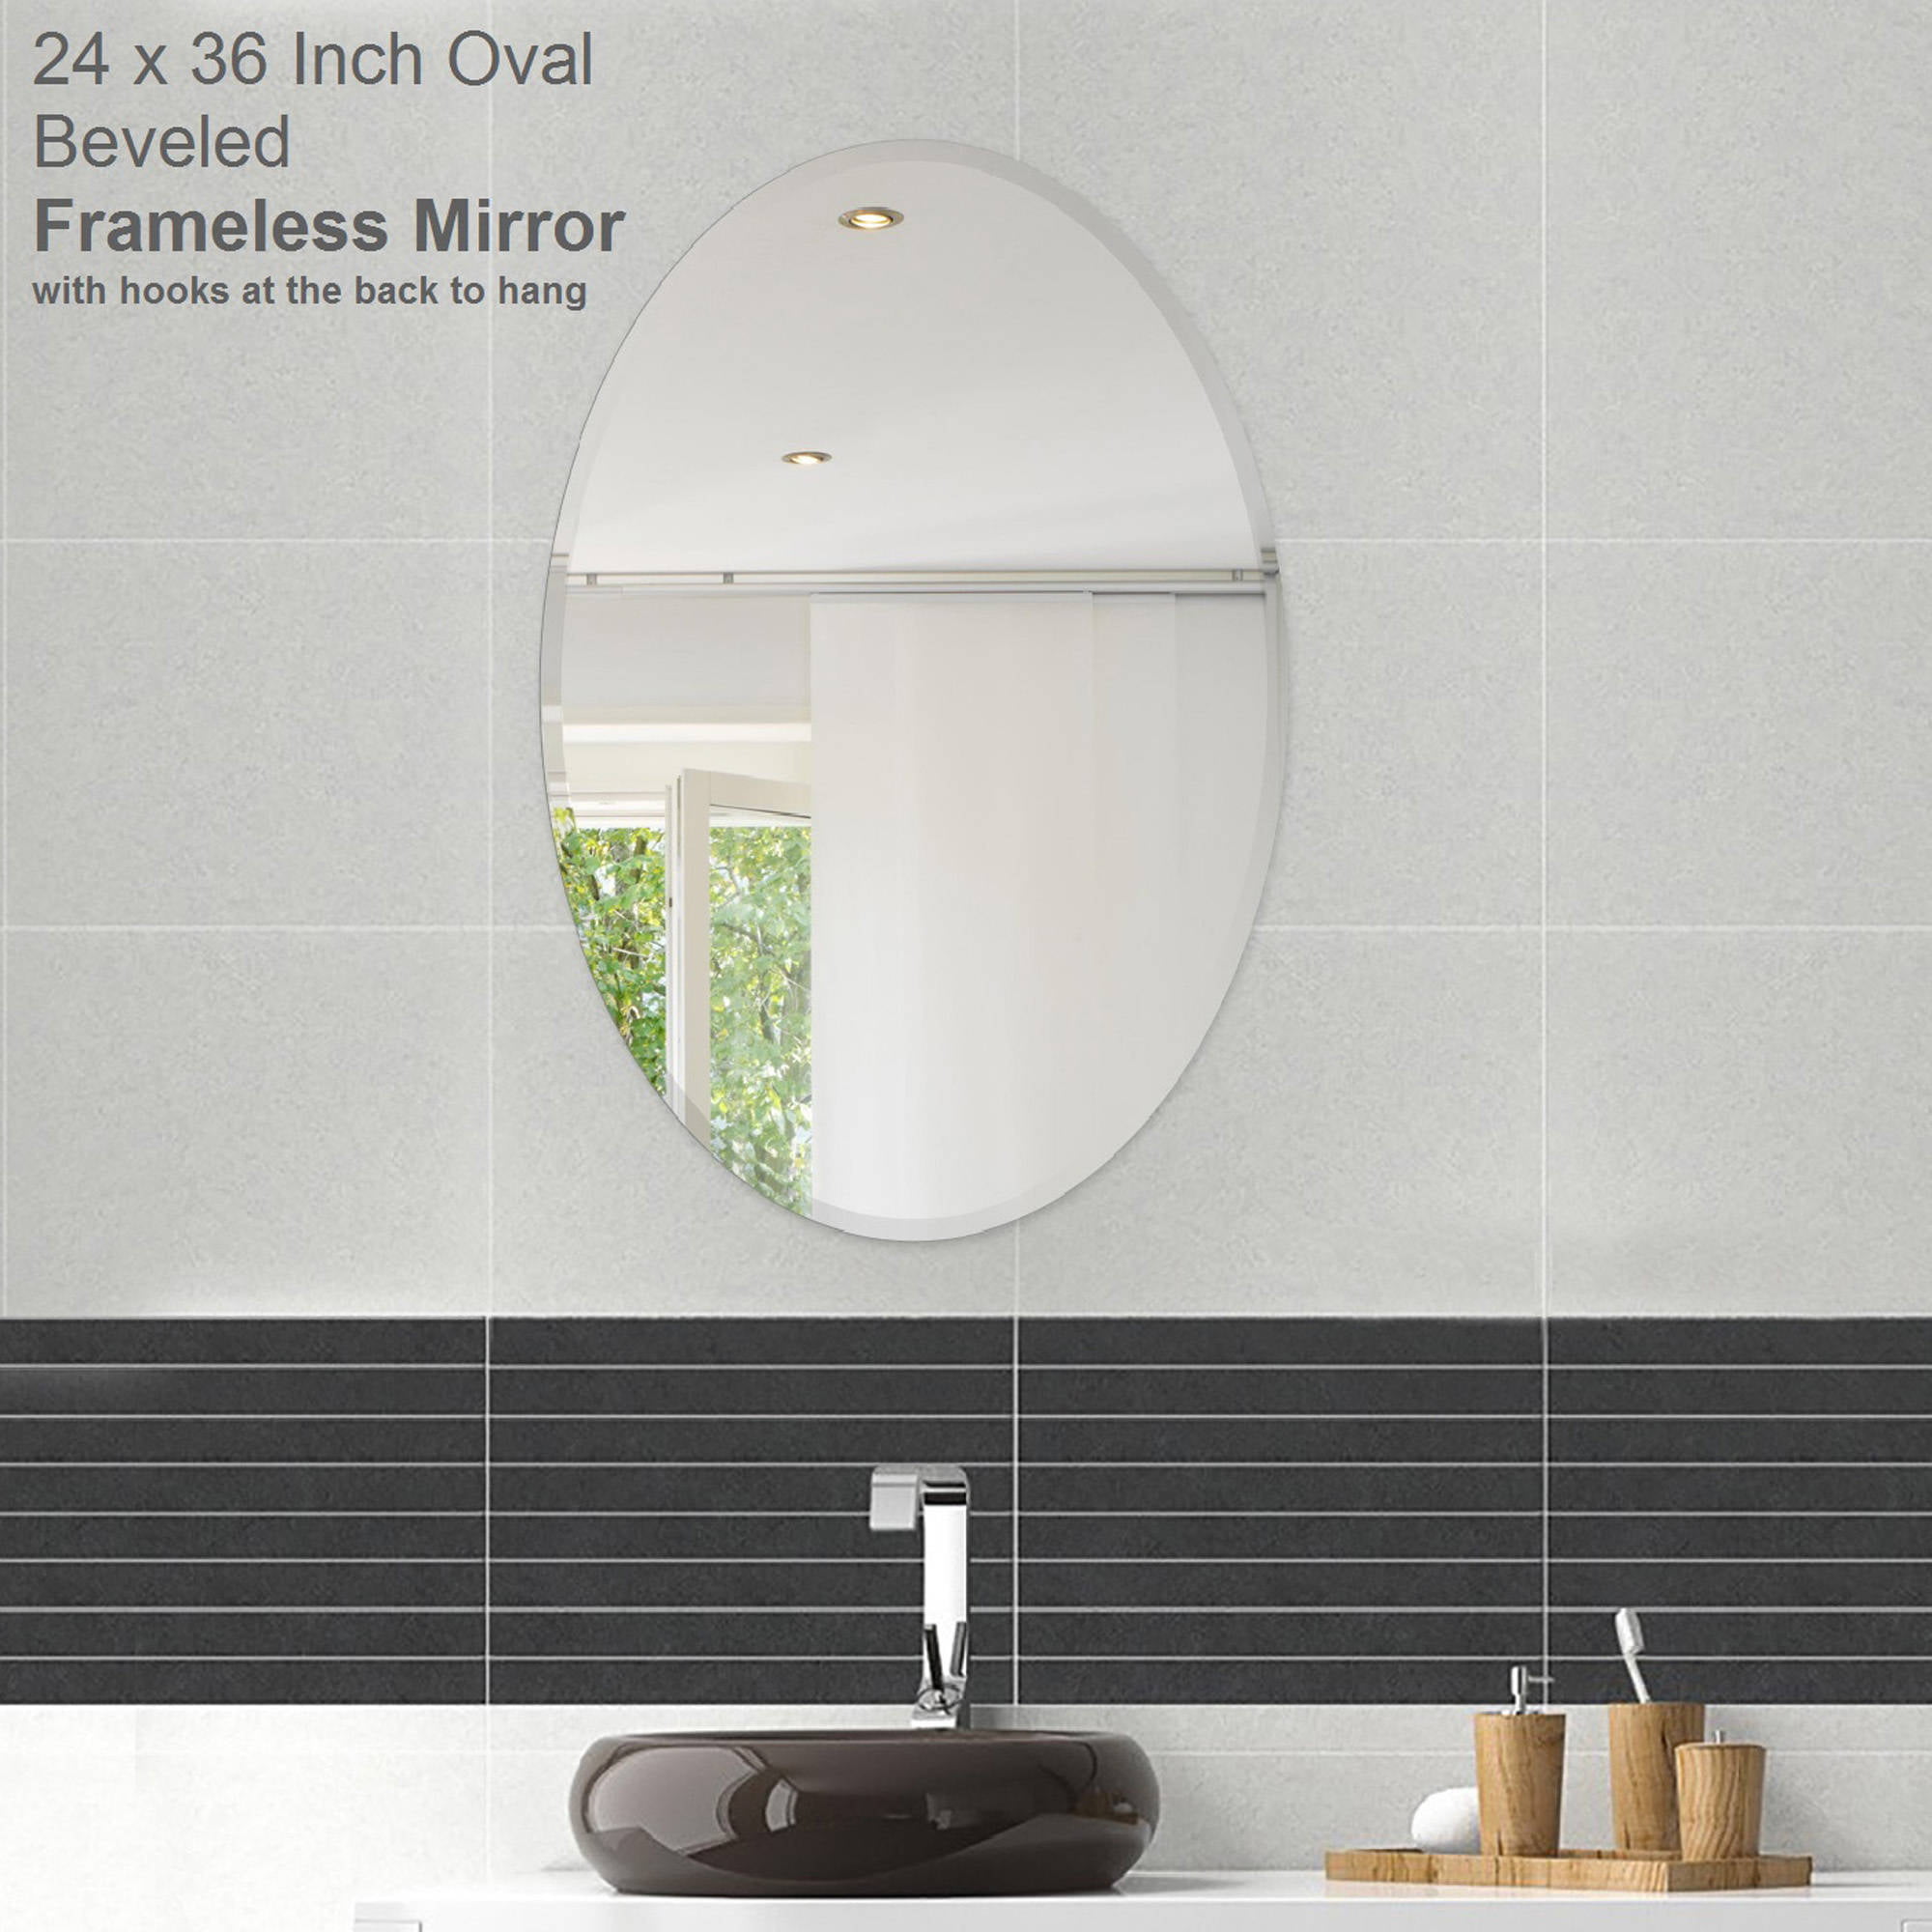 Beveled Wall Mirror Supplier